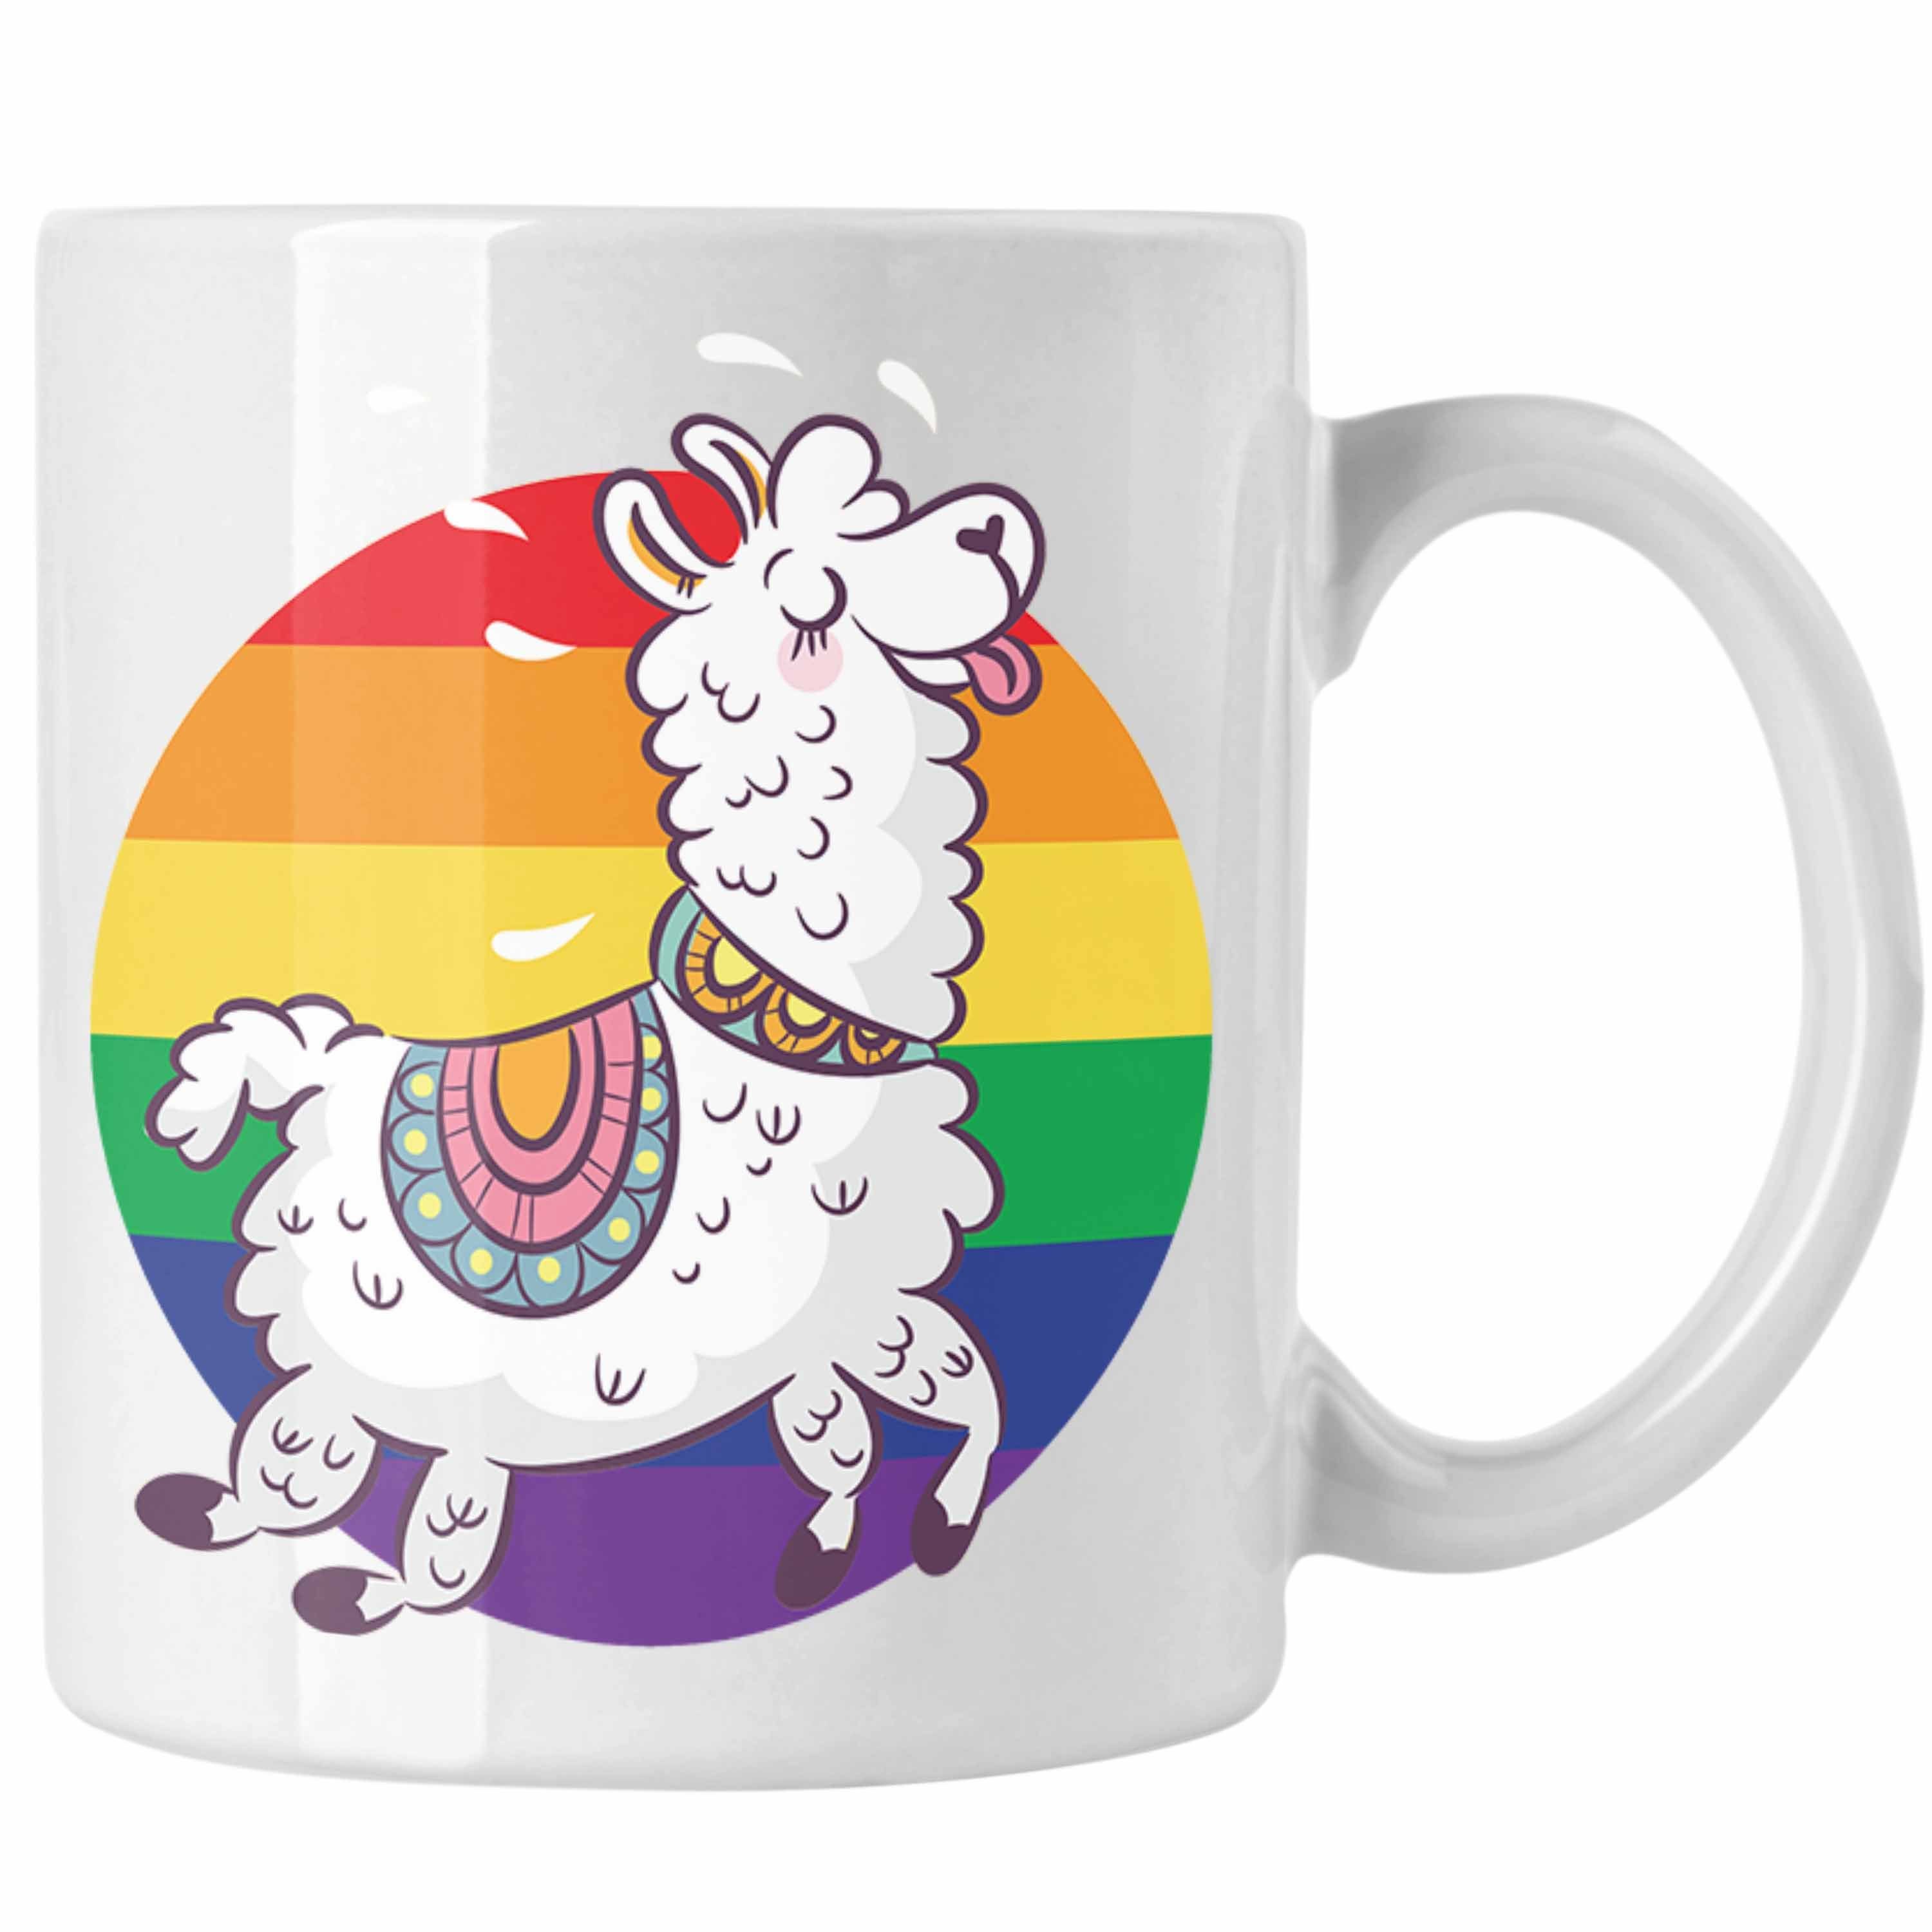 Trendation Tasse Trendation - Weiss Regenbogen Transgender Llama Tasse Geschenk Schwule LGBT Pride Lesben Tolles Grafik